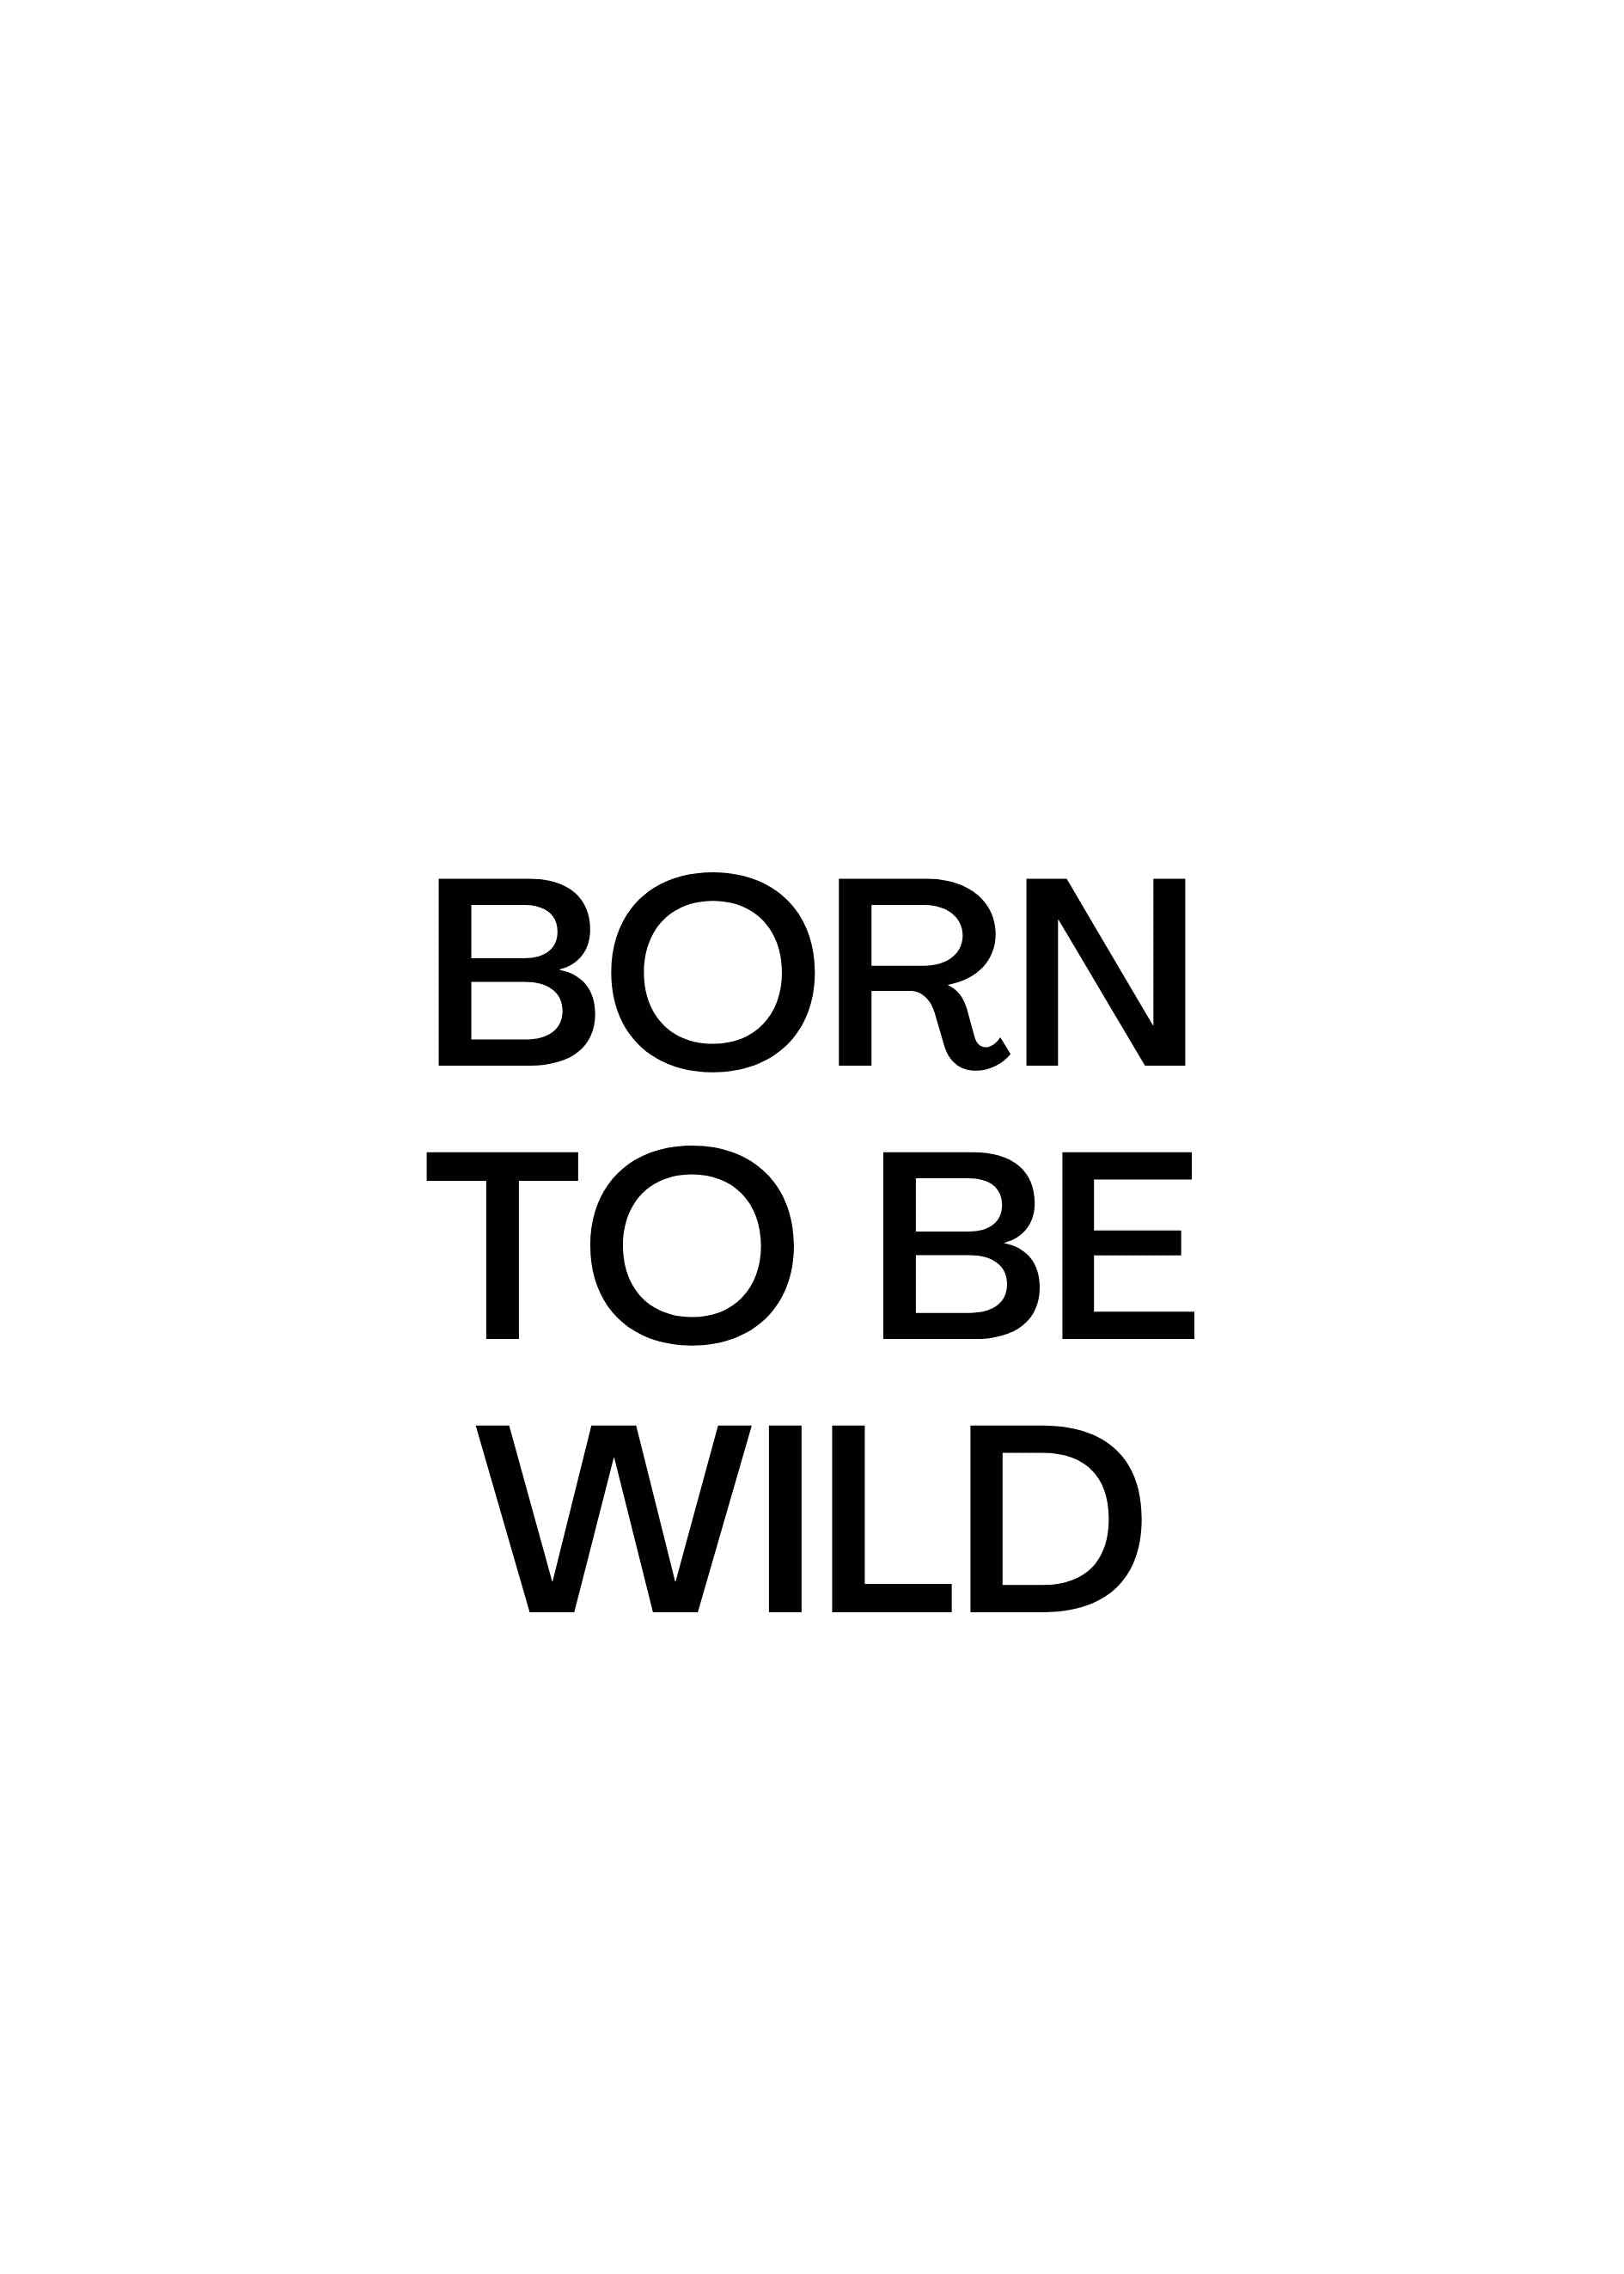 Barncitat Born to be wild barnposter